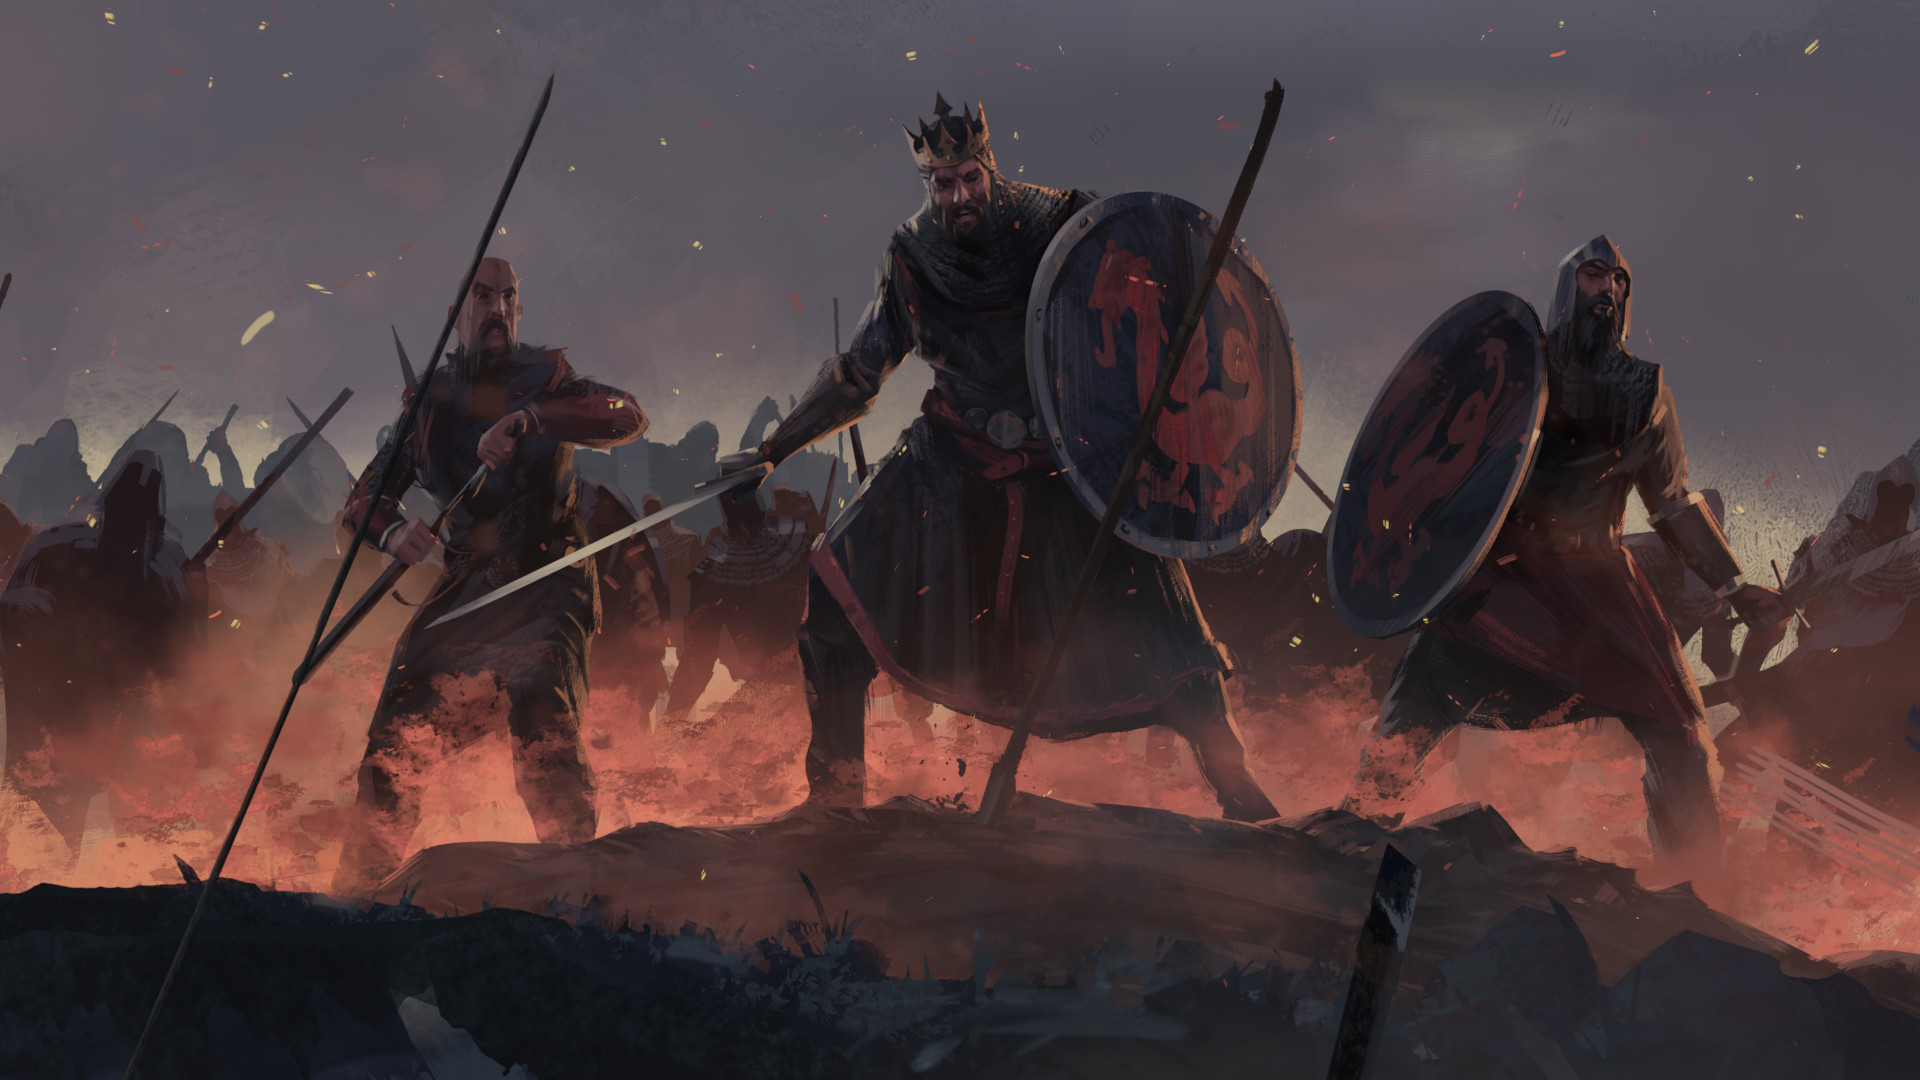 Descargar fondos de escritorio de Total War Saga: Thrones Of Britannia HD